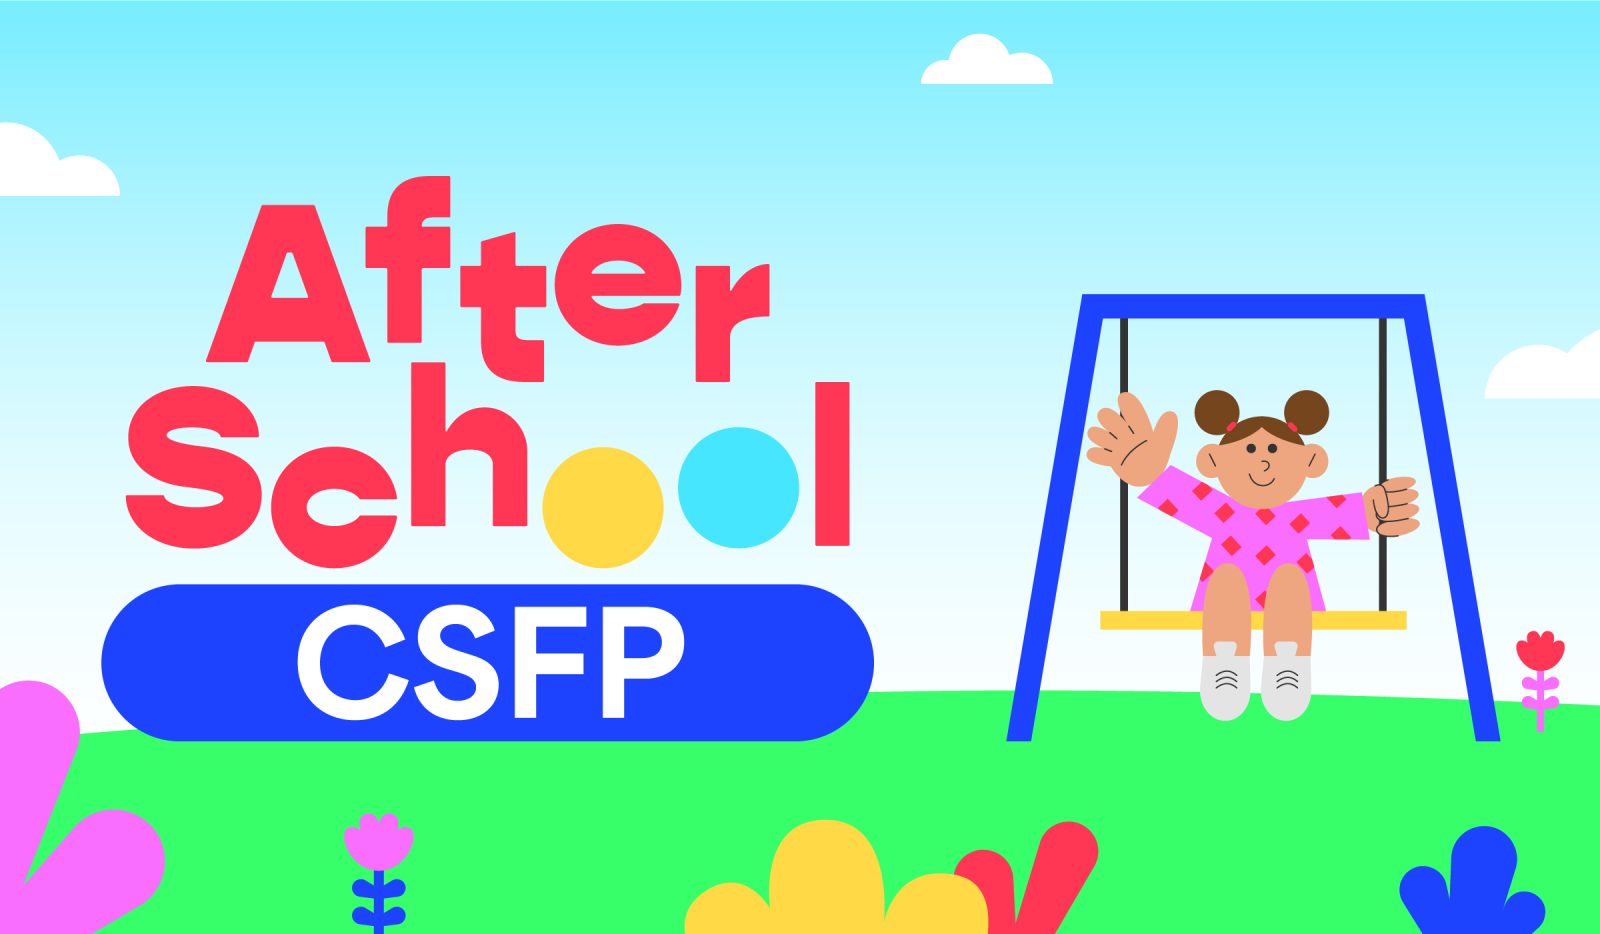 After School CSFP